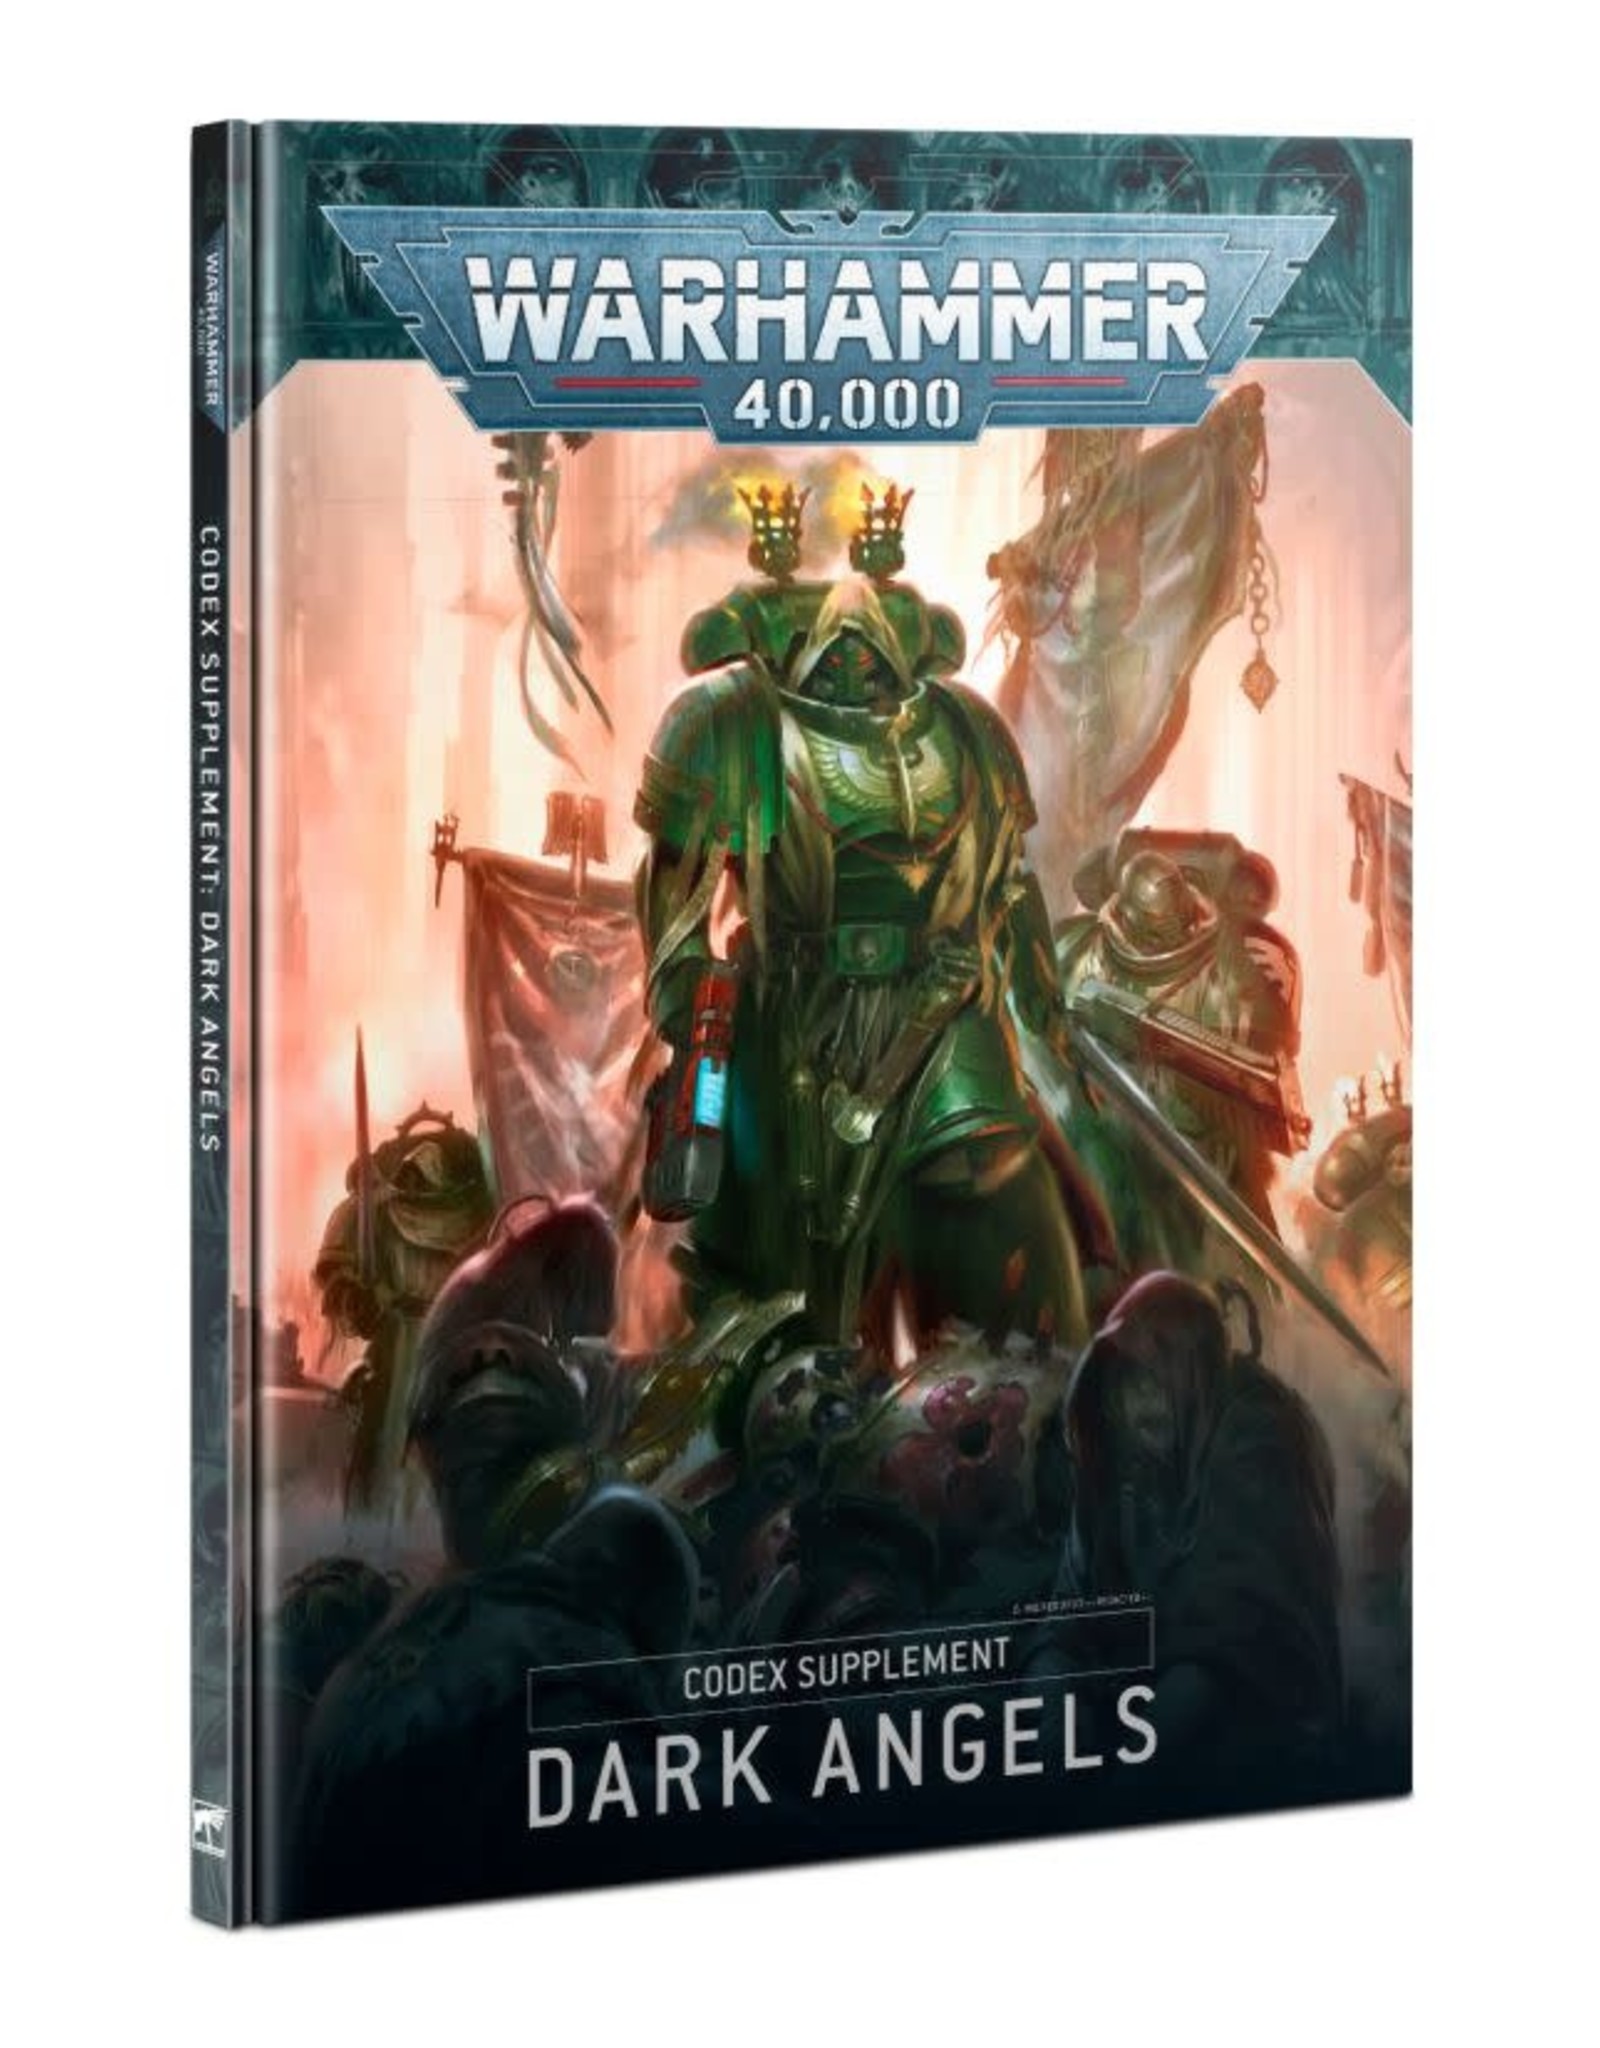 Warhammer 40k Codex: Dark Angels (9th Edition)